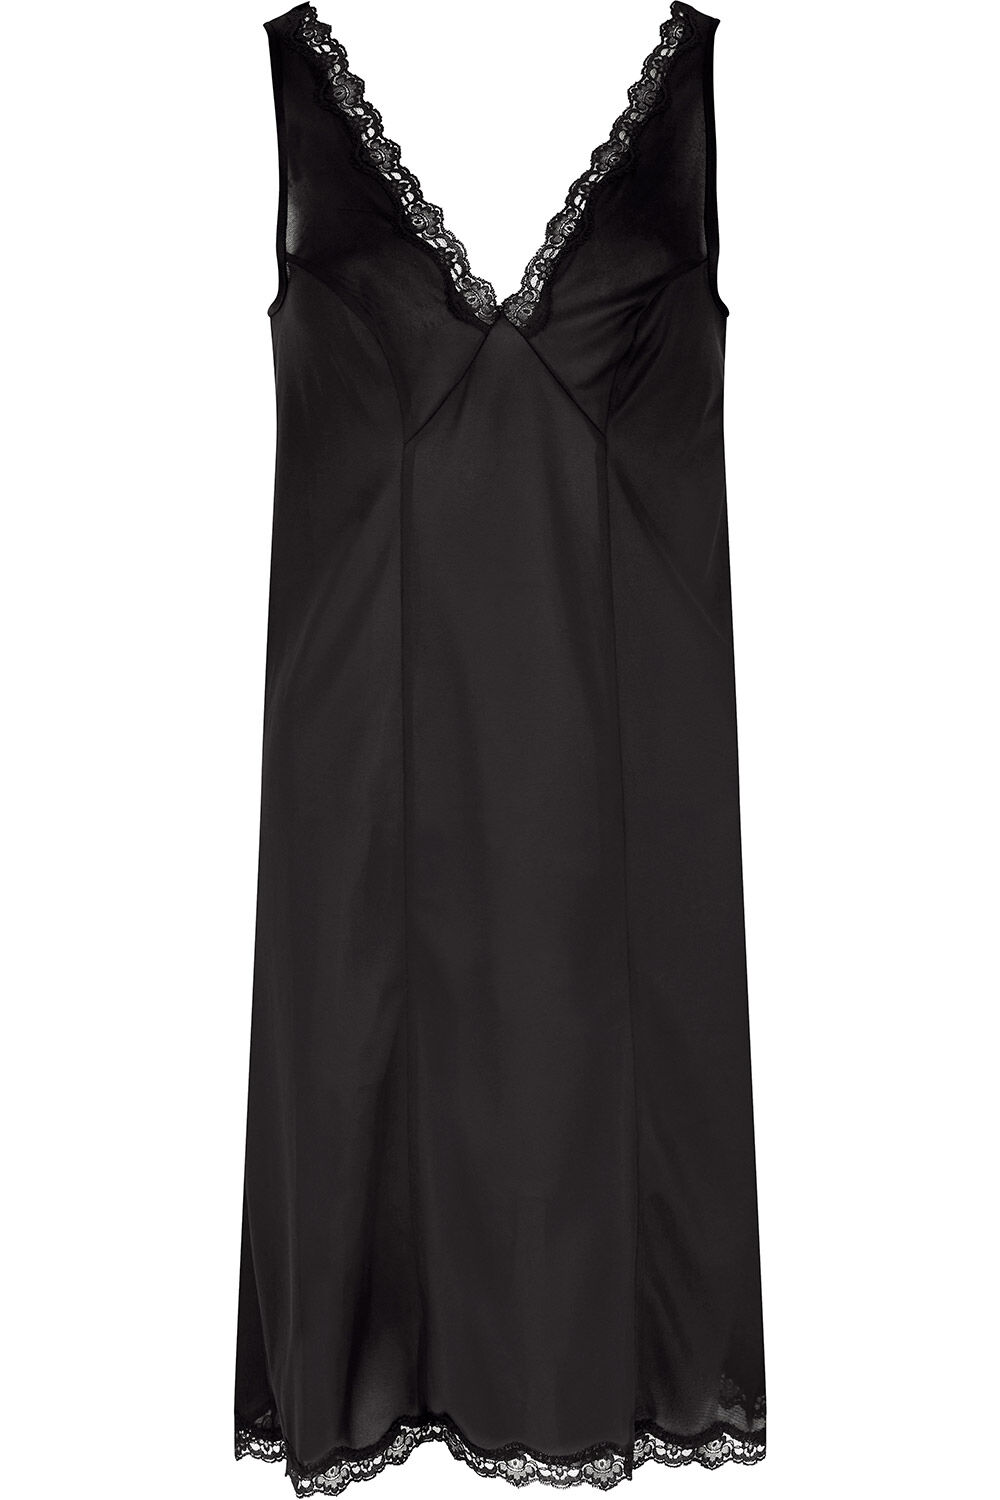 MANCYFIT Womens Full Slip Tank Top Dress Slip Sleeveless Under Dress Wide Straps